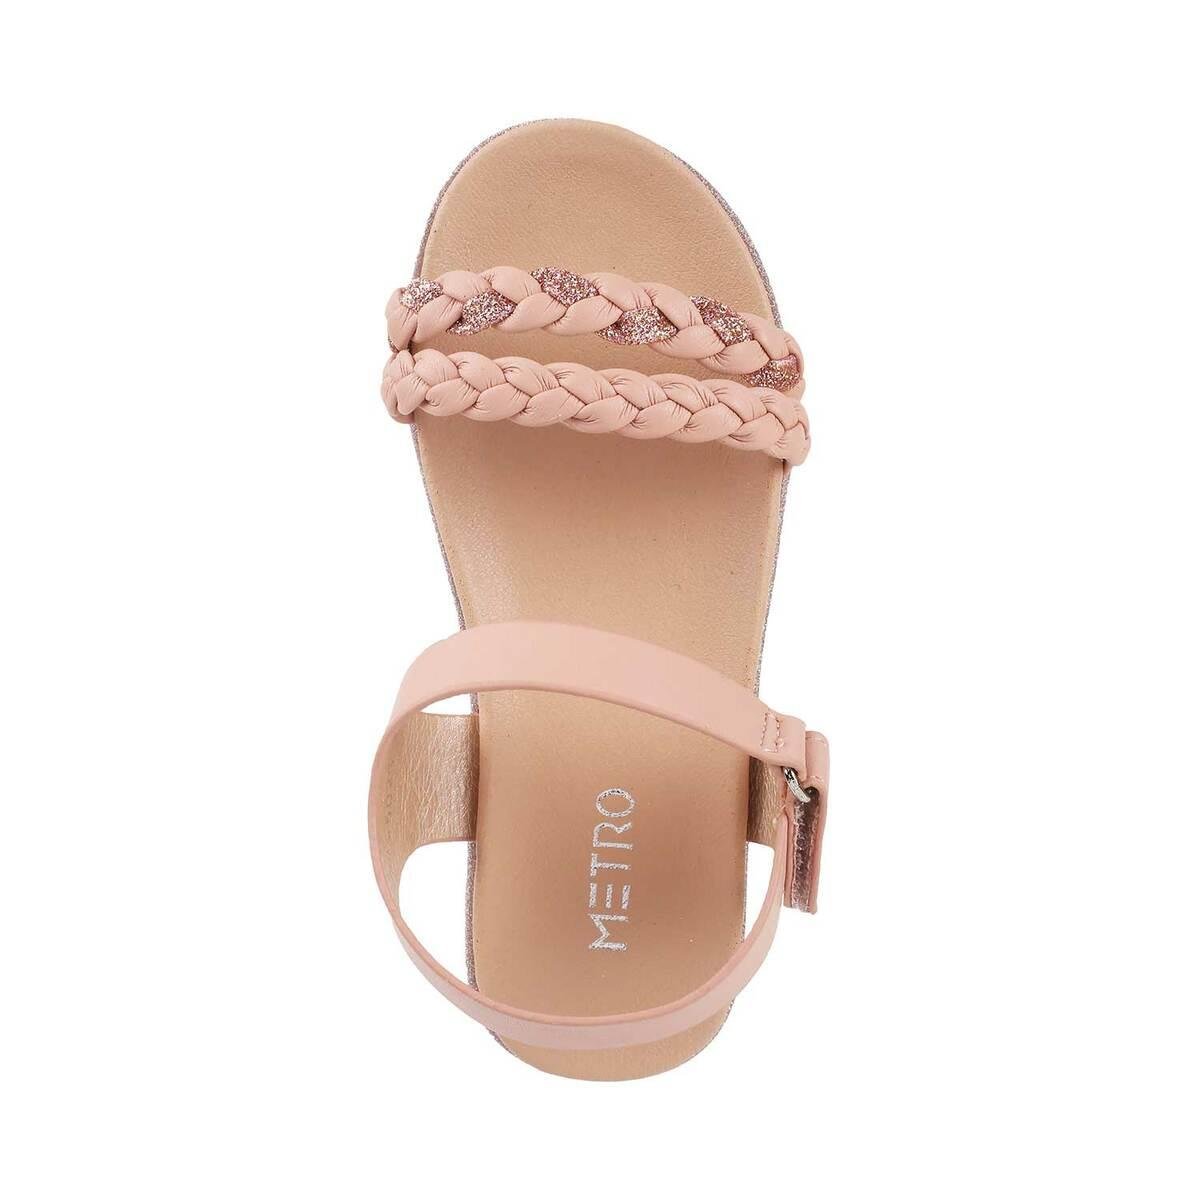 Wavsuf Toddler Girl Sandals Cute Casual Bow Anti-slip Soft Bottom Pink Sandals  Size 12-18 Months - Walmart.com